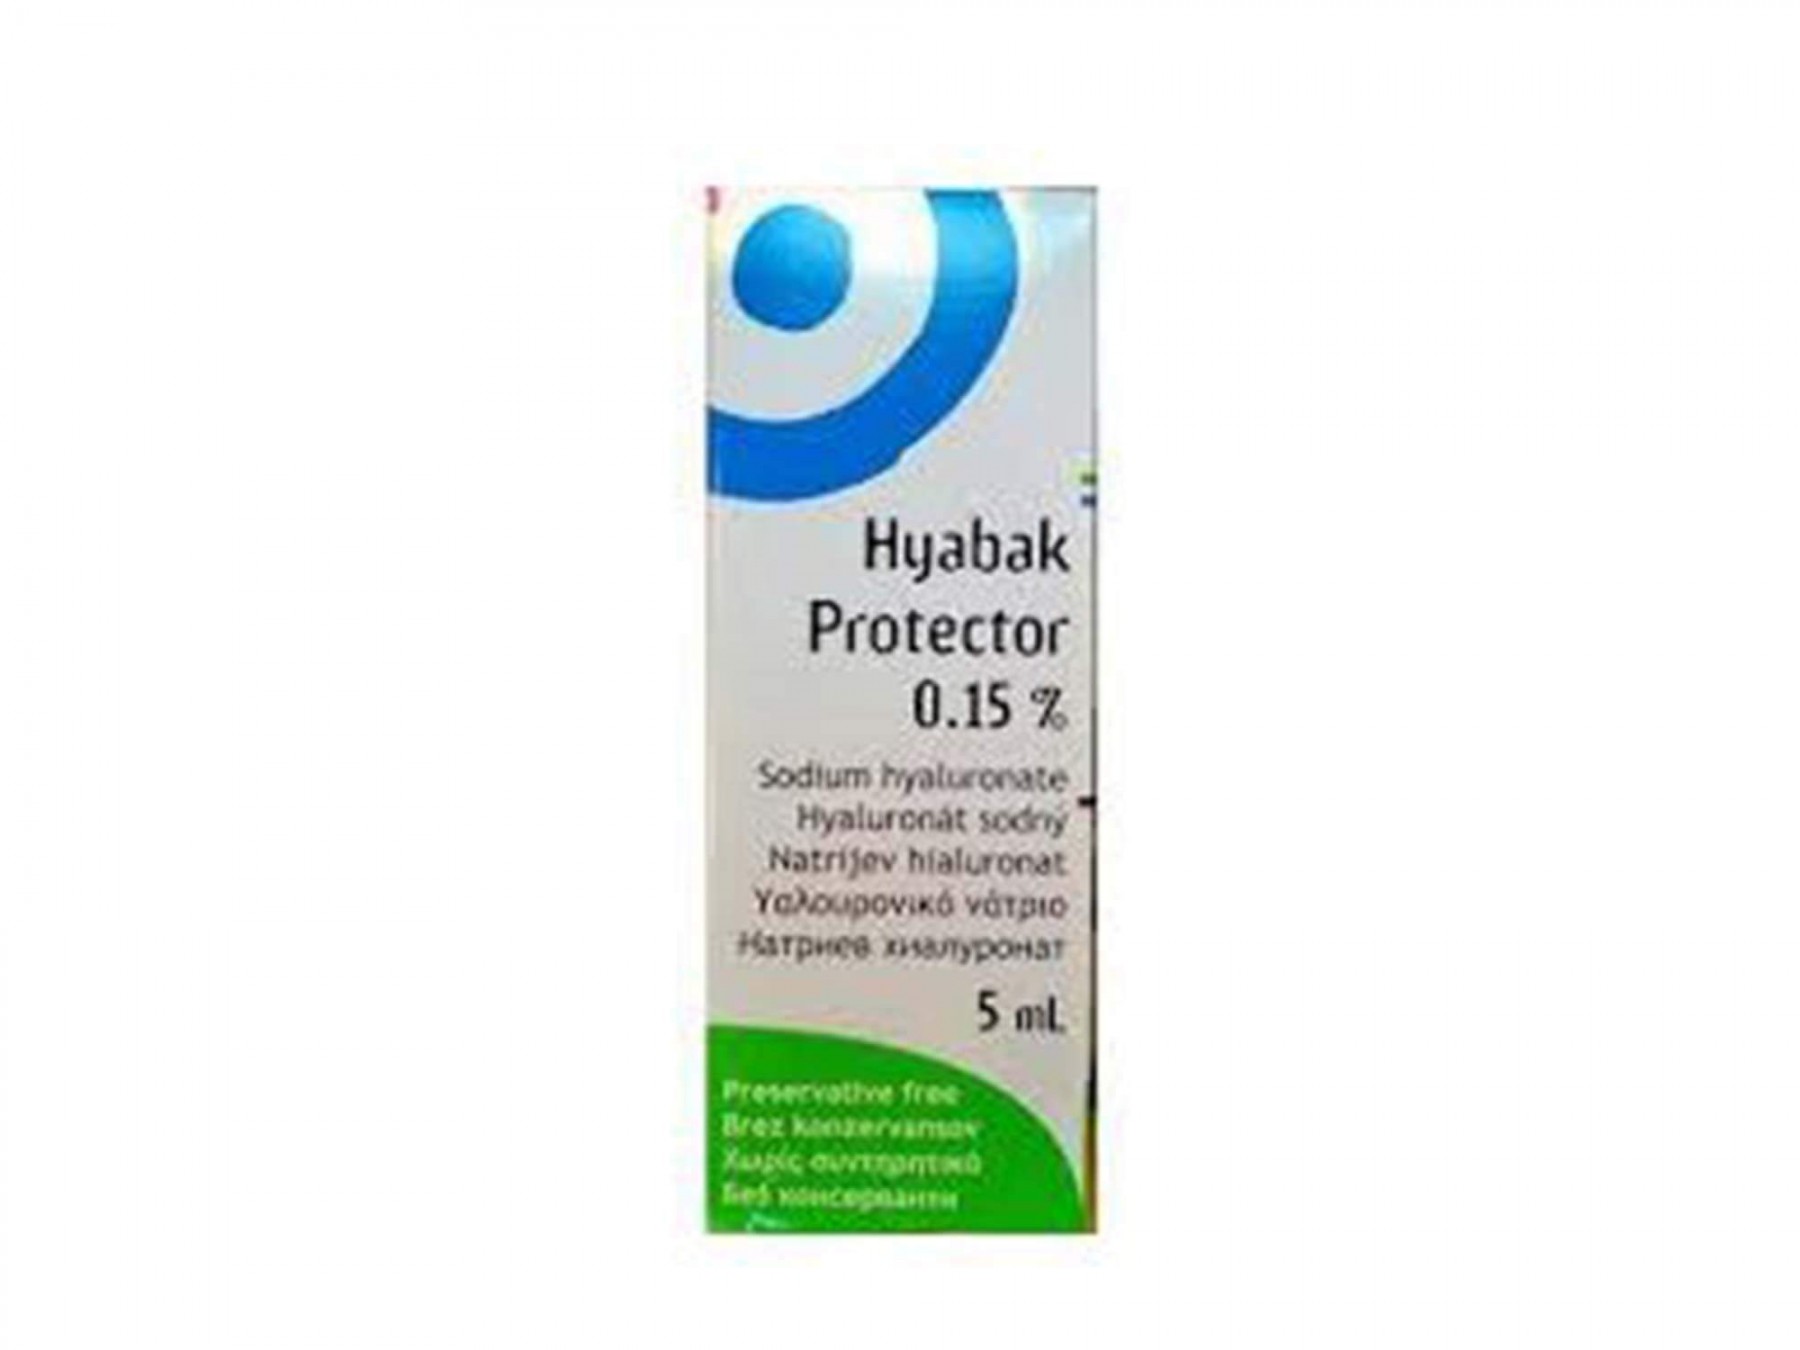 Hyabak 0.15% (5 ml), gota de ojos